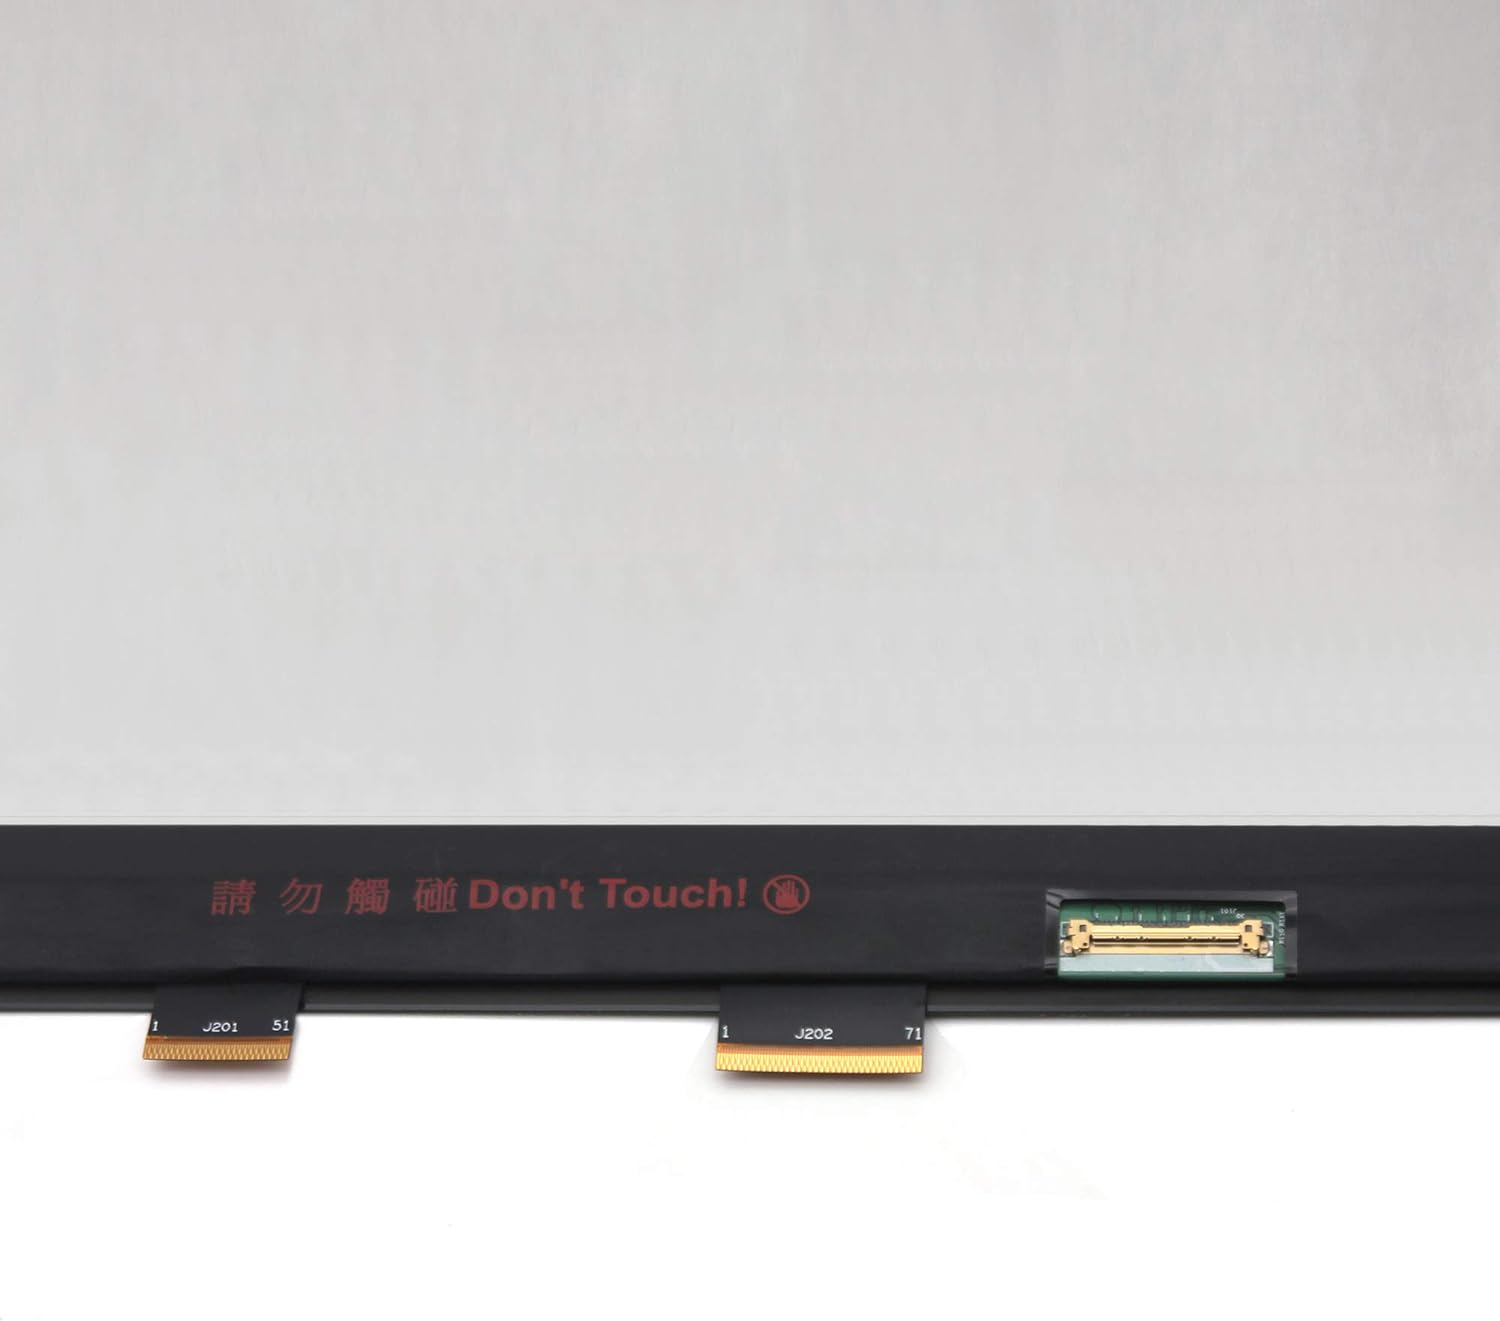 Ecran Tactile 13.3 HDMI LCD IPS 1920x1080